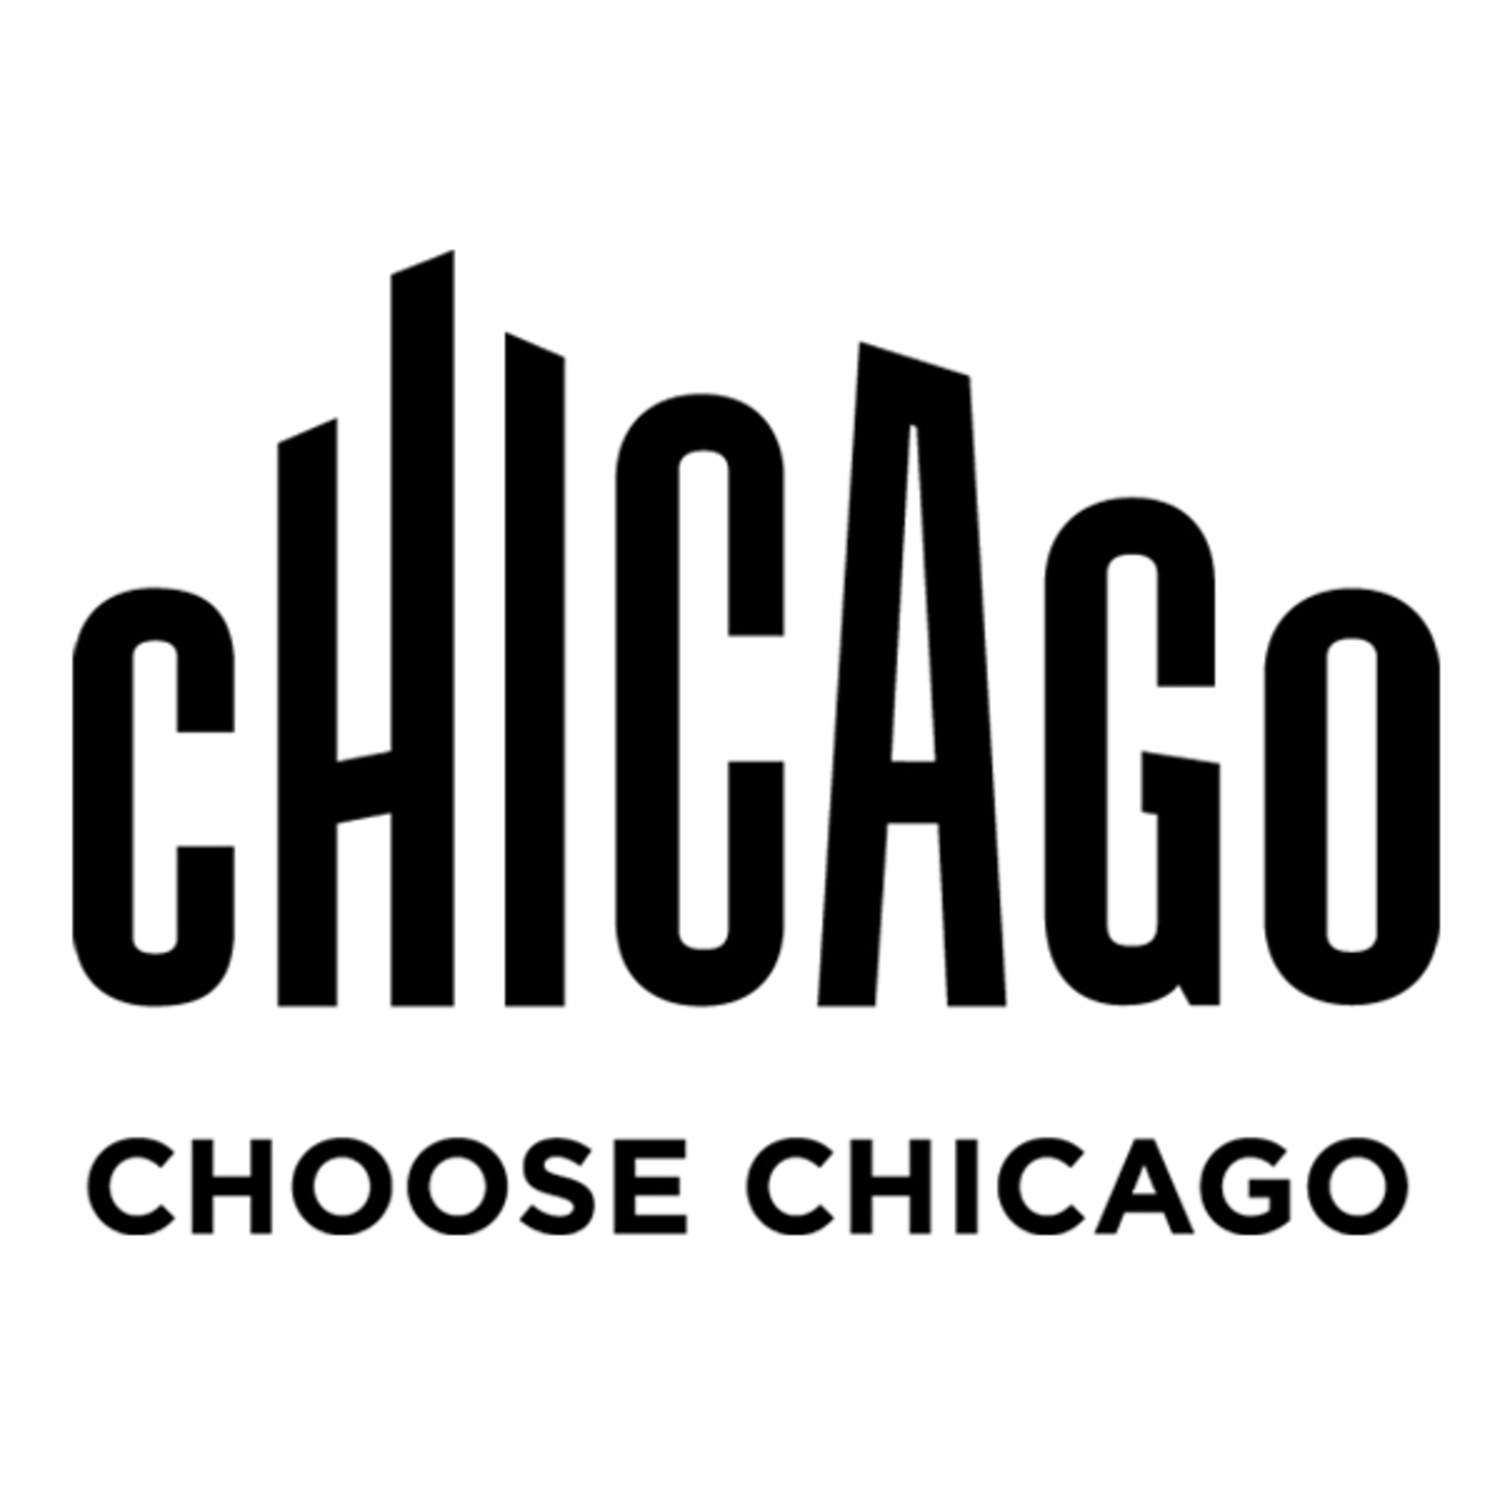 Choose Chicago Announces Tourism & Hospitality Forward To Responsibly